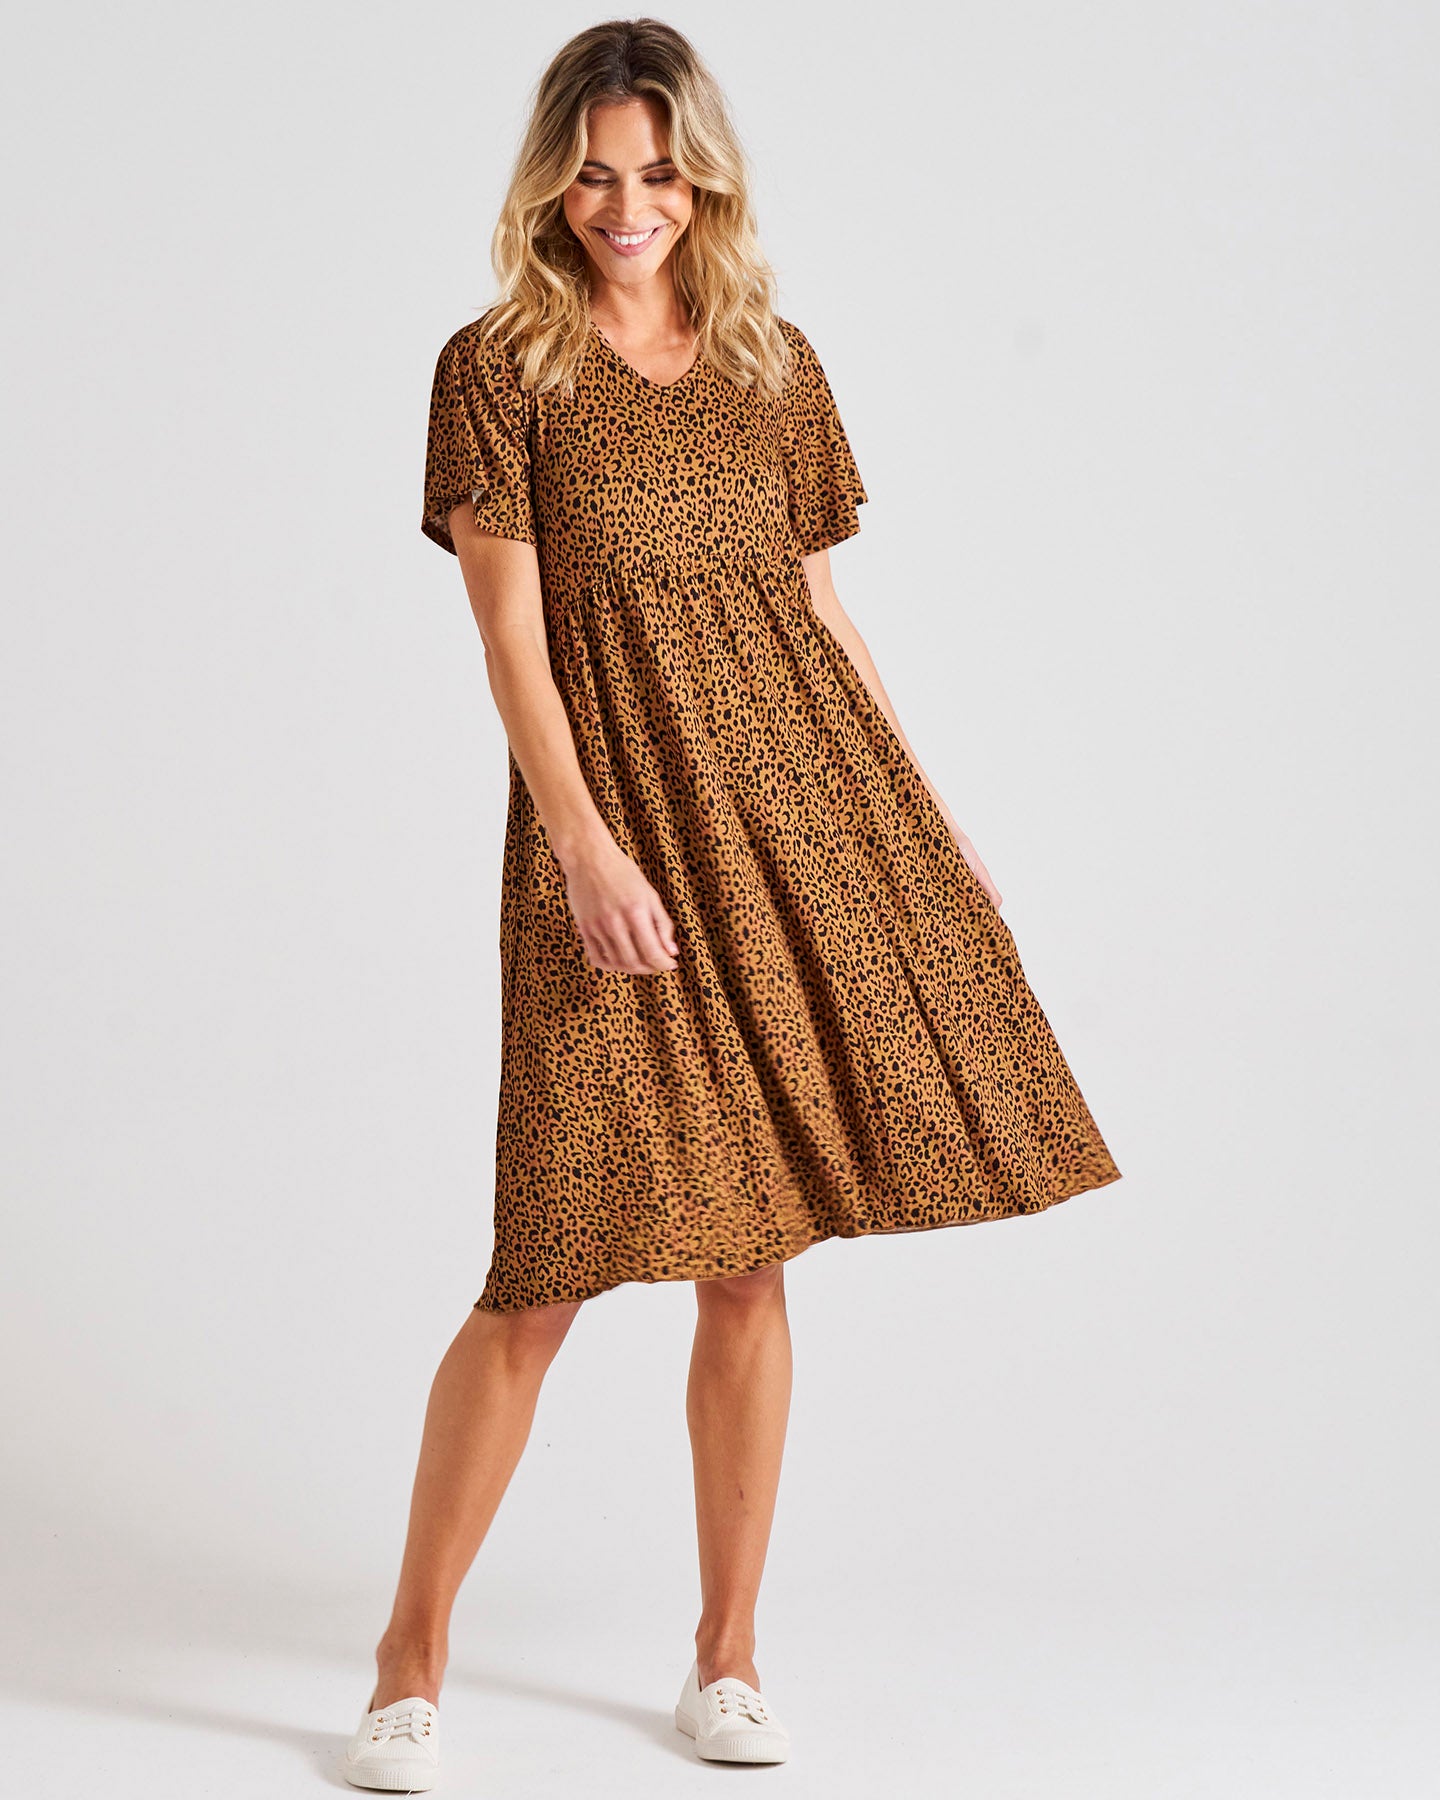 Donna Stretchy Frill Sleeve T-Shirt Dress - Wild Leopard Print